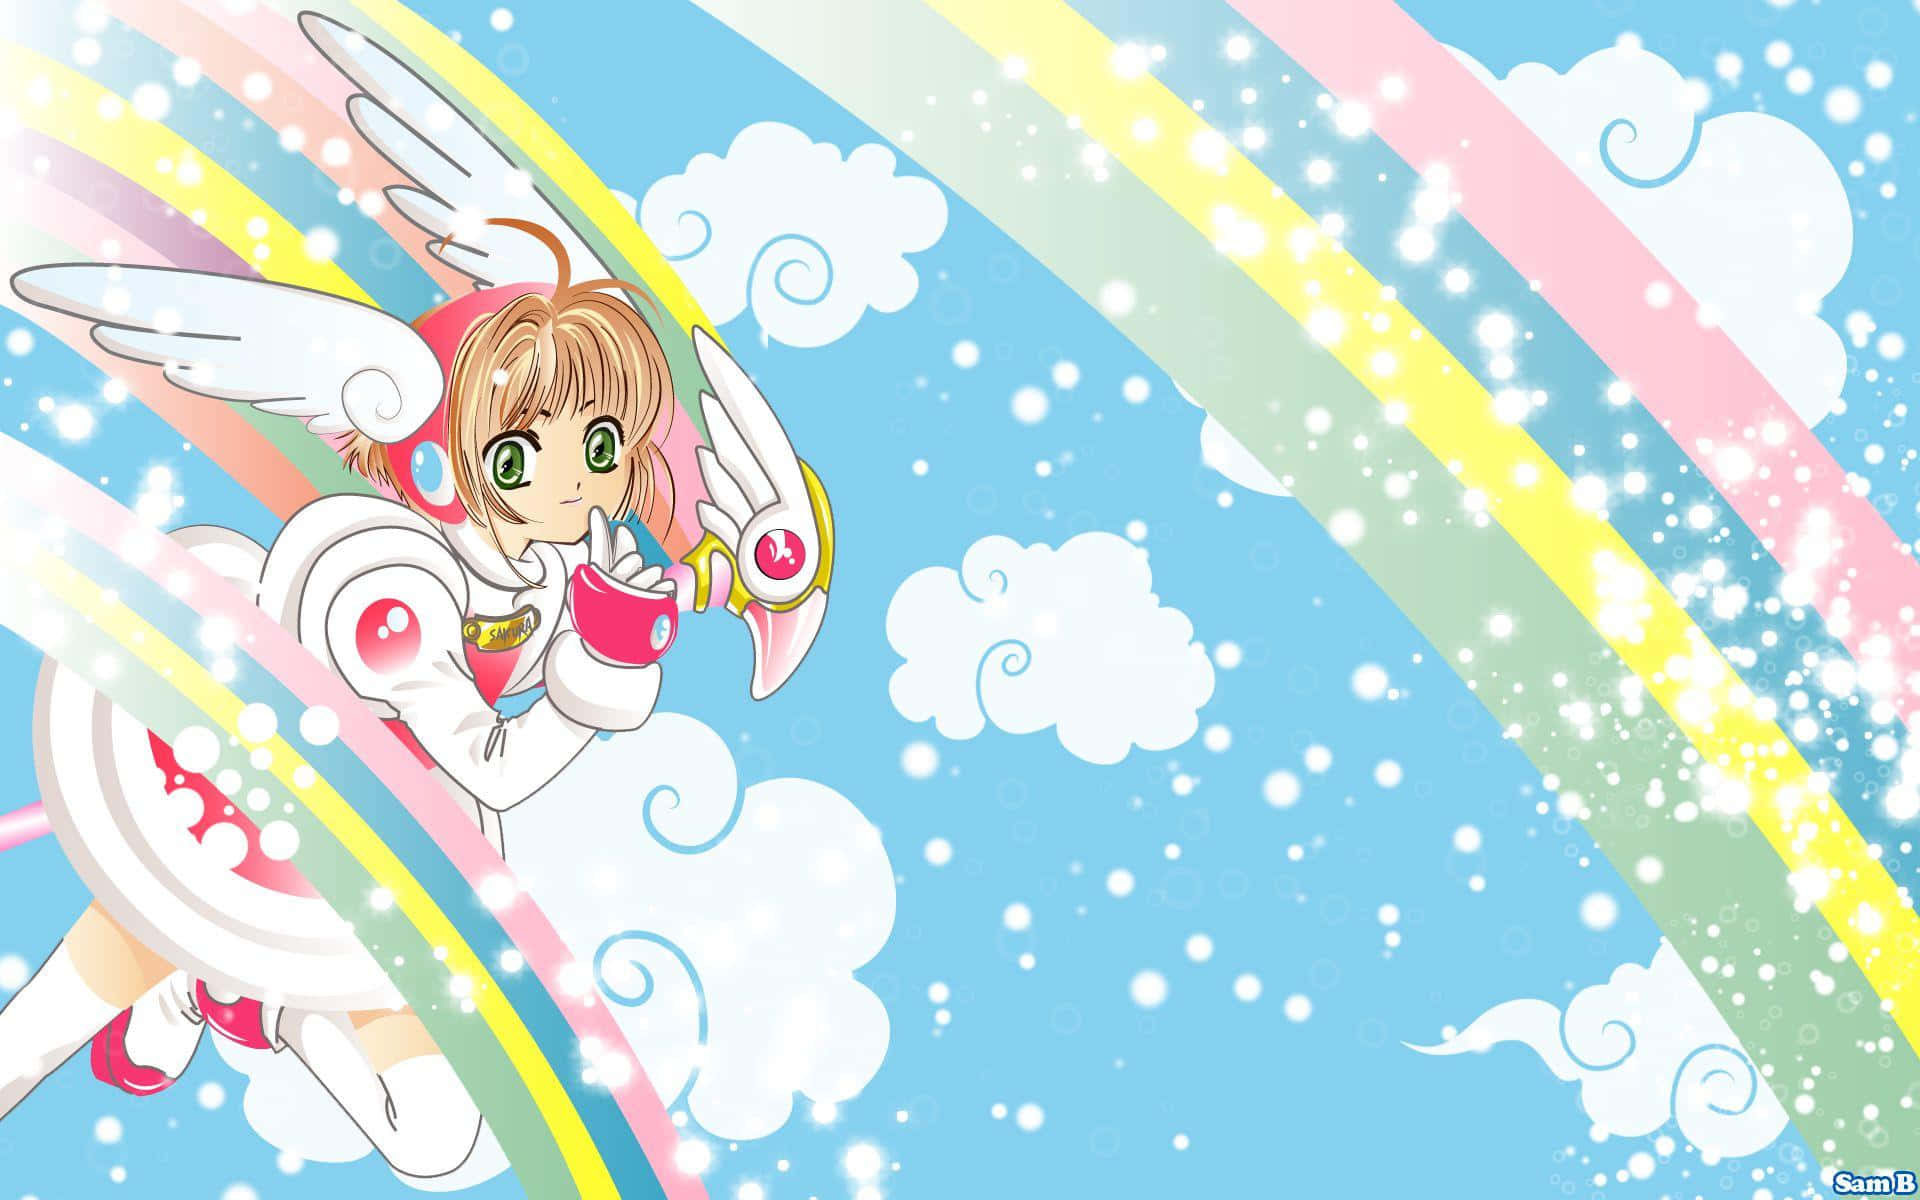 Fly Higher with Cardcaptor Sakura